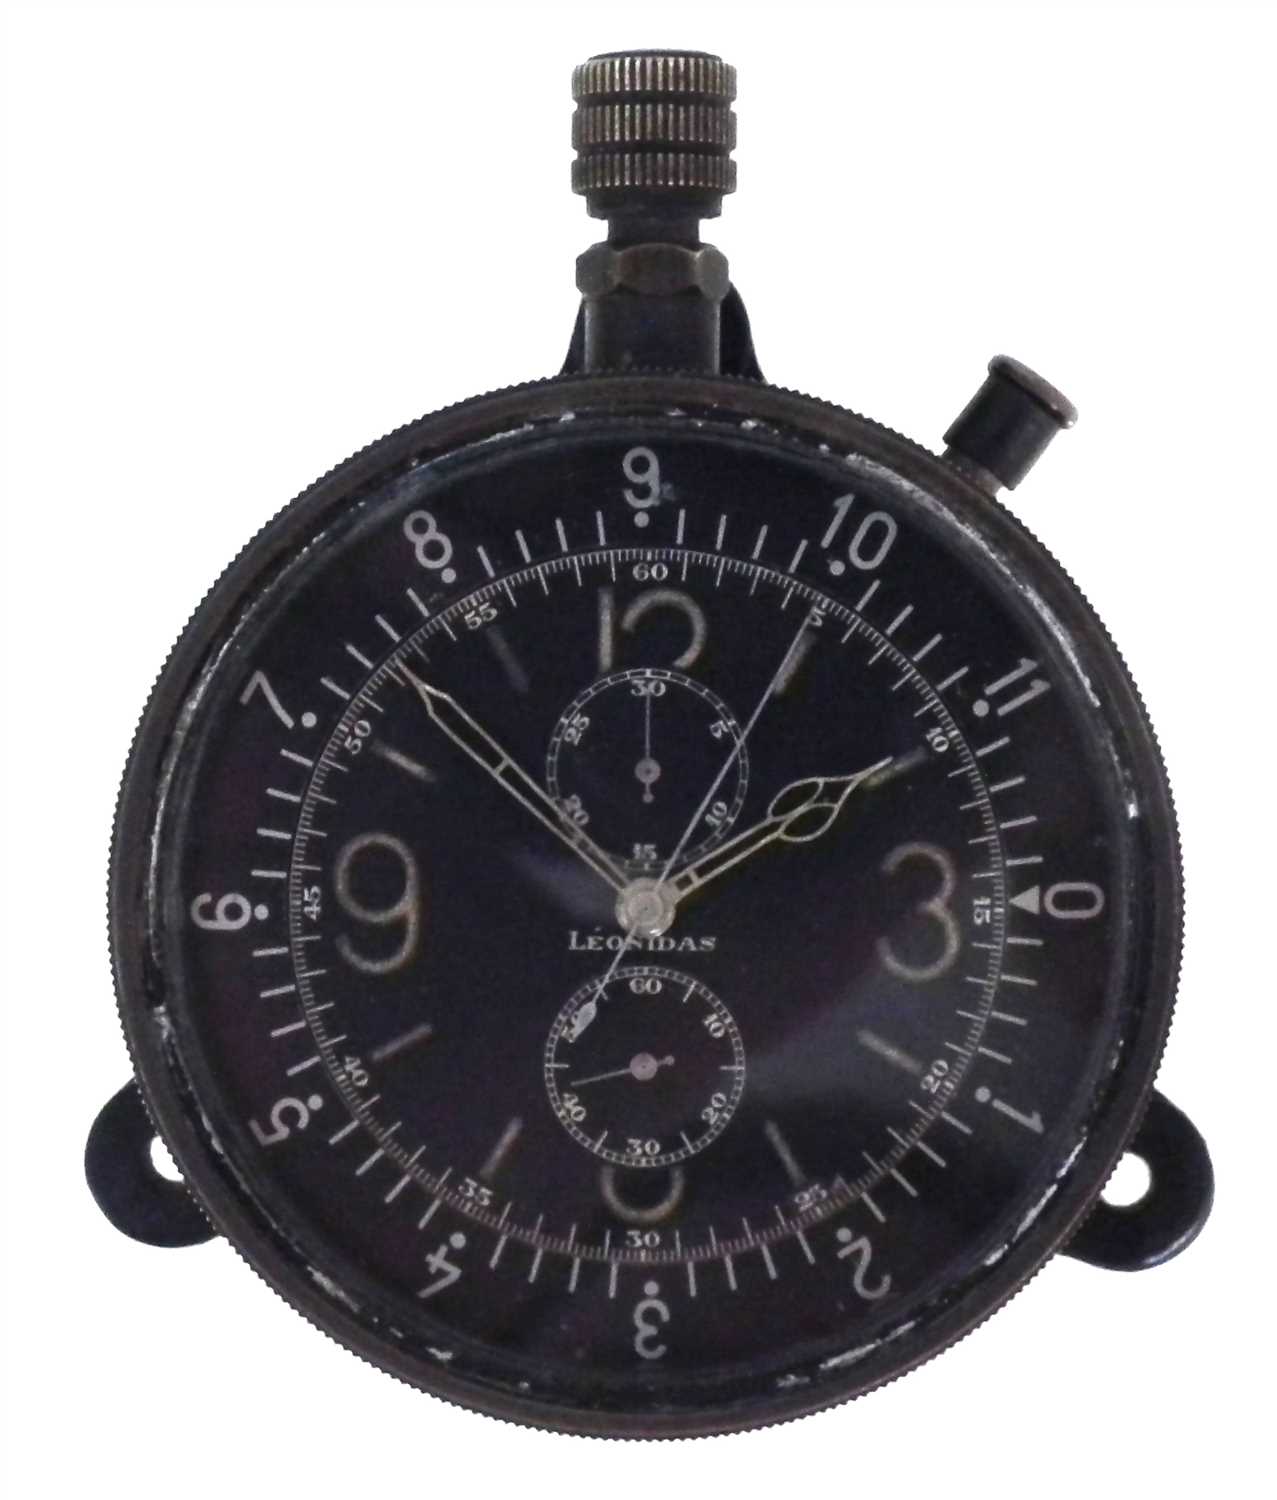 Lot 240 - WWII Italian Fascist Regia Aeronautica Aircraft clock by Leonidas